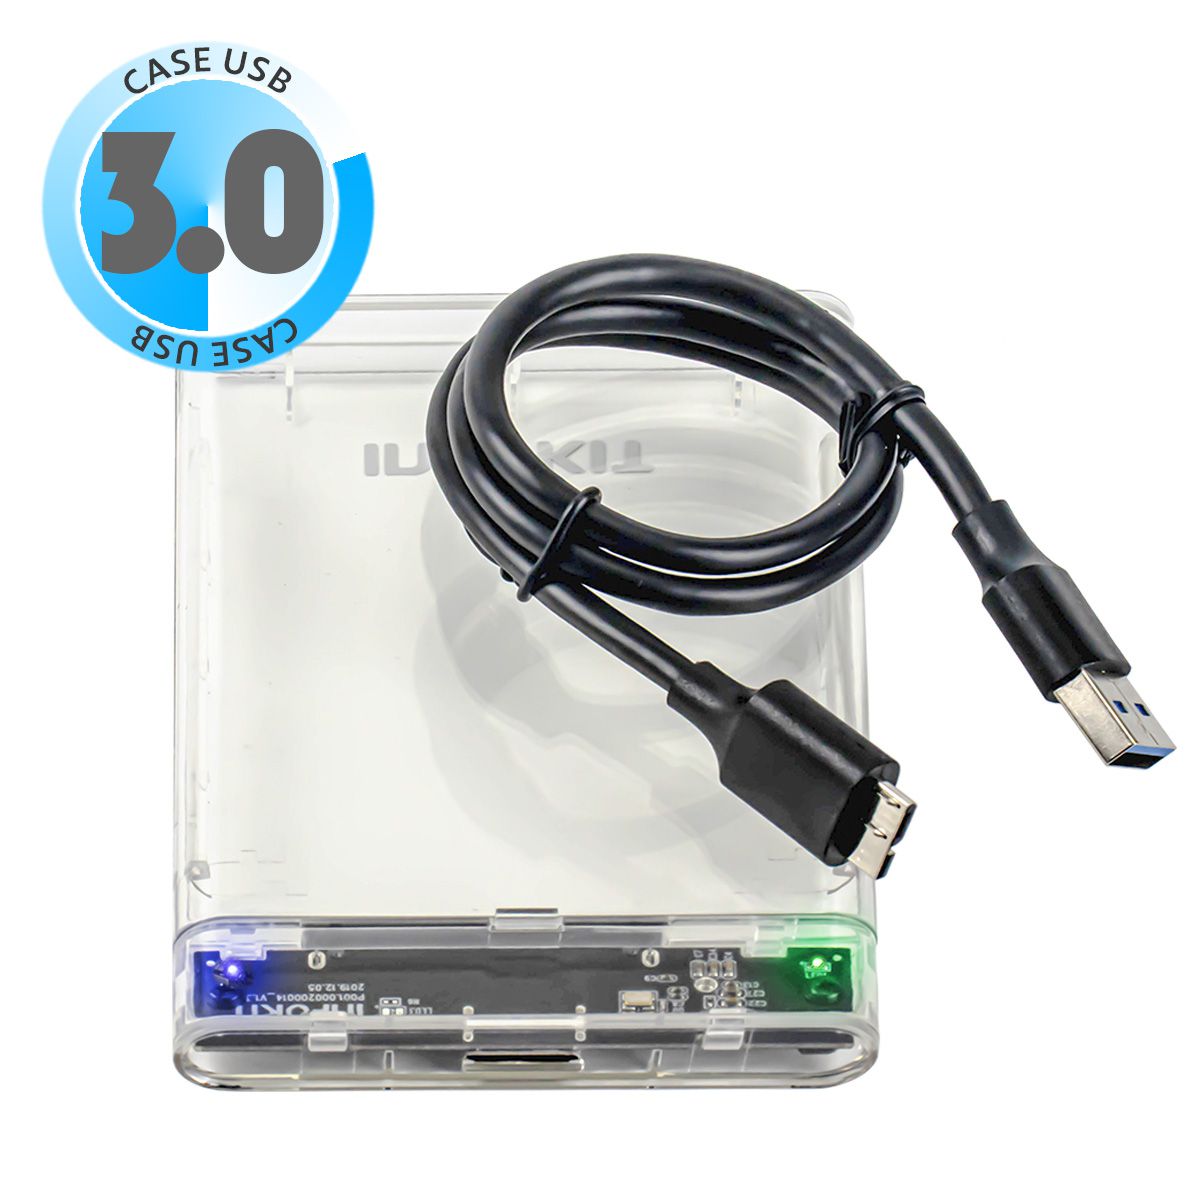 Case USB 3.0 Transparente para HD Sata de 2,5